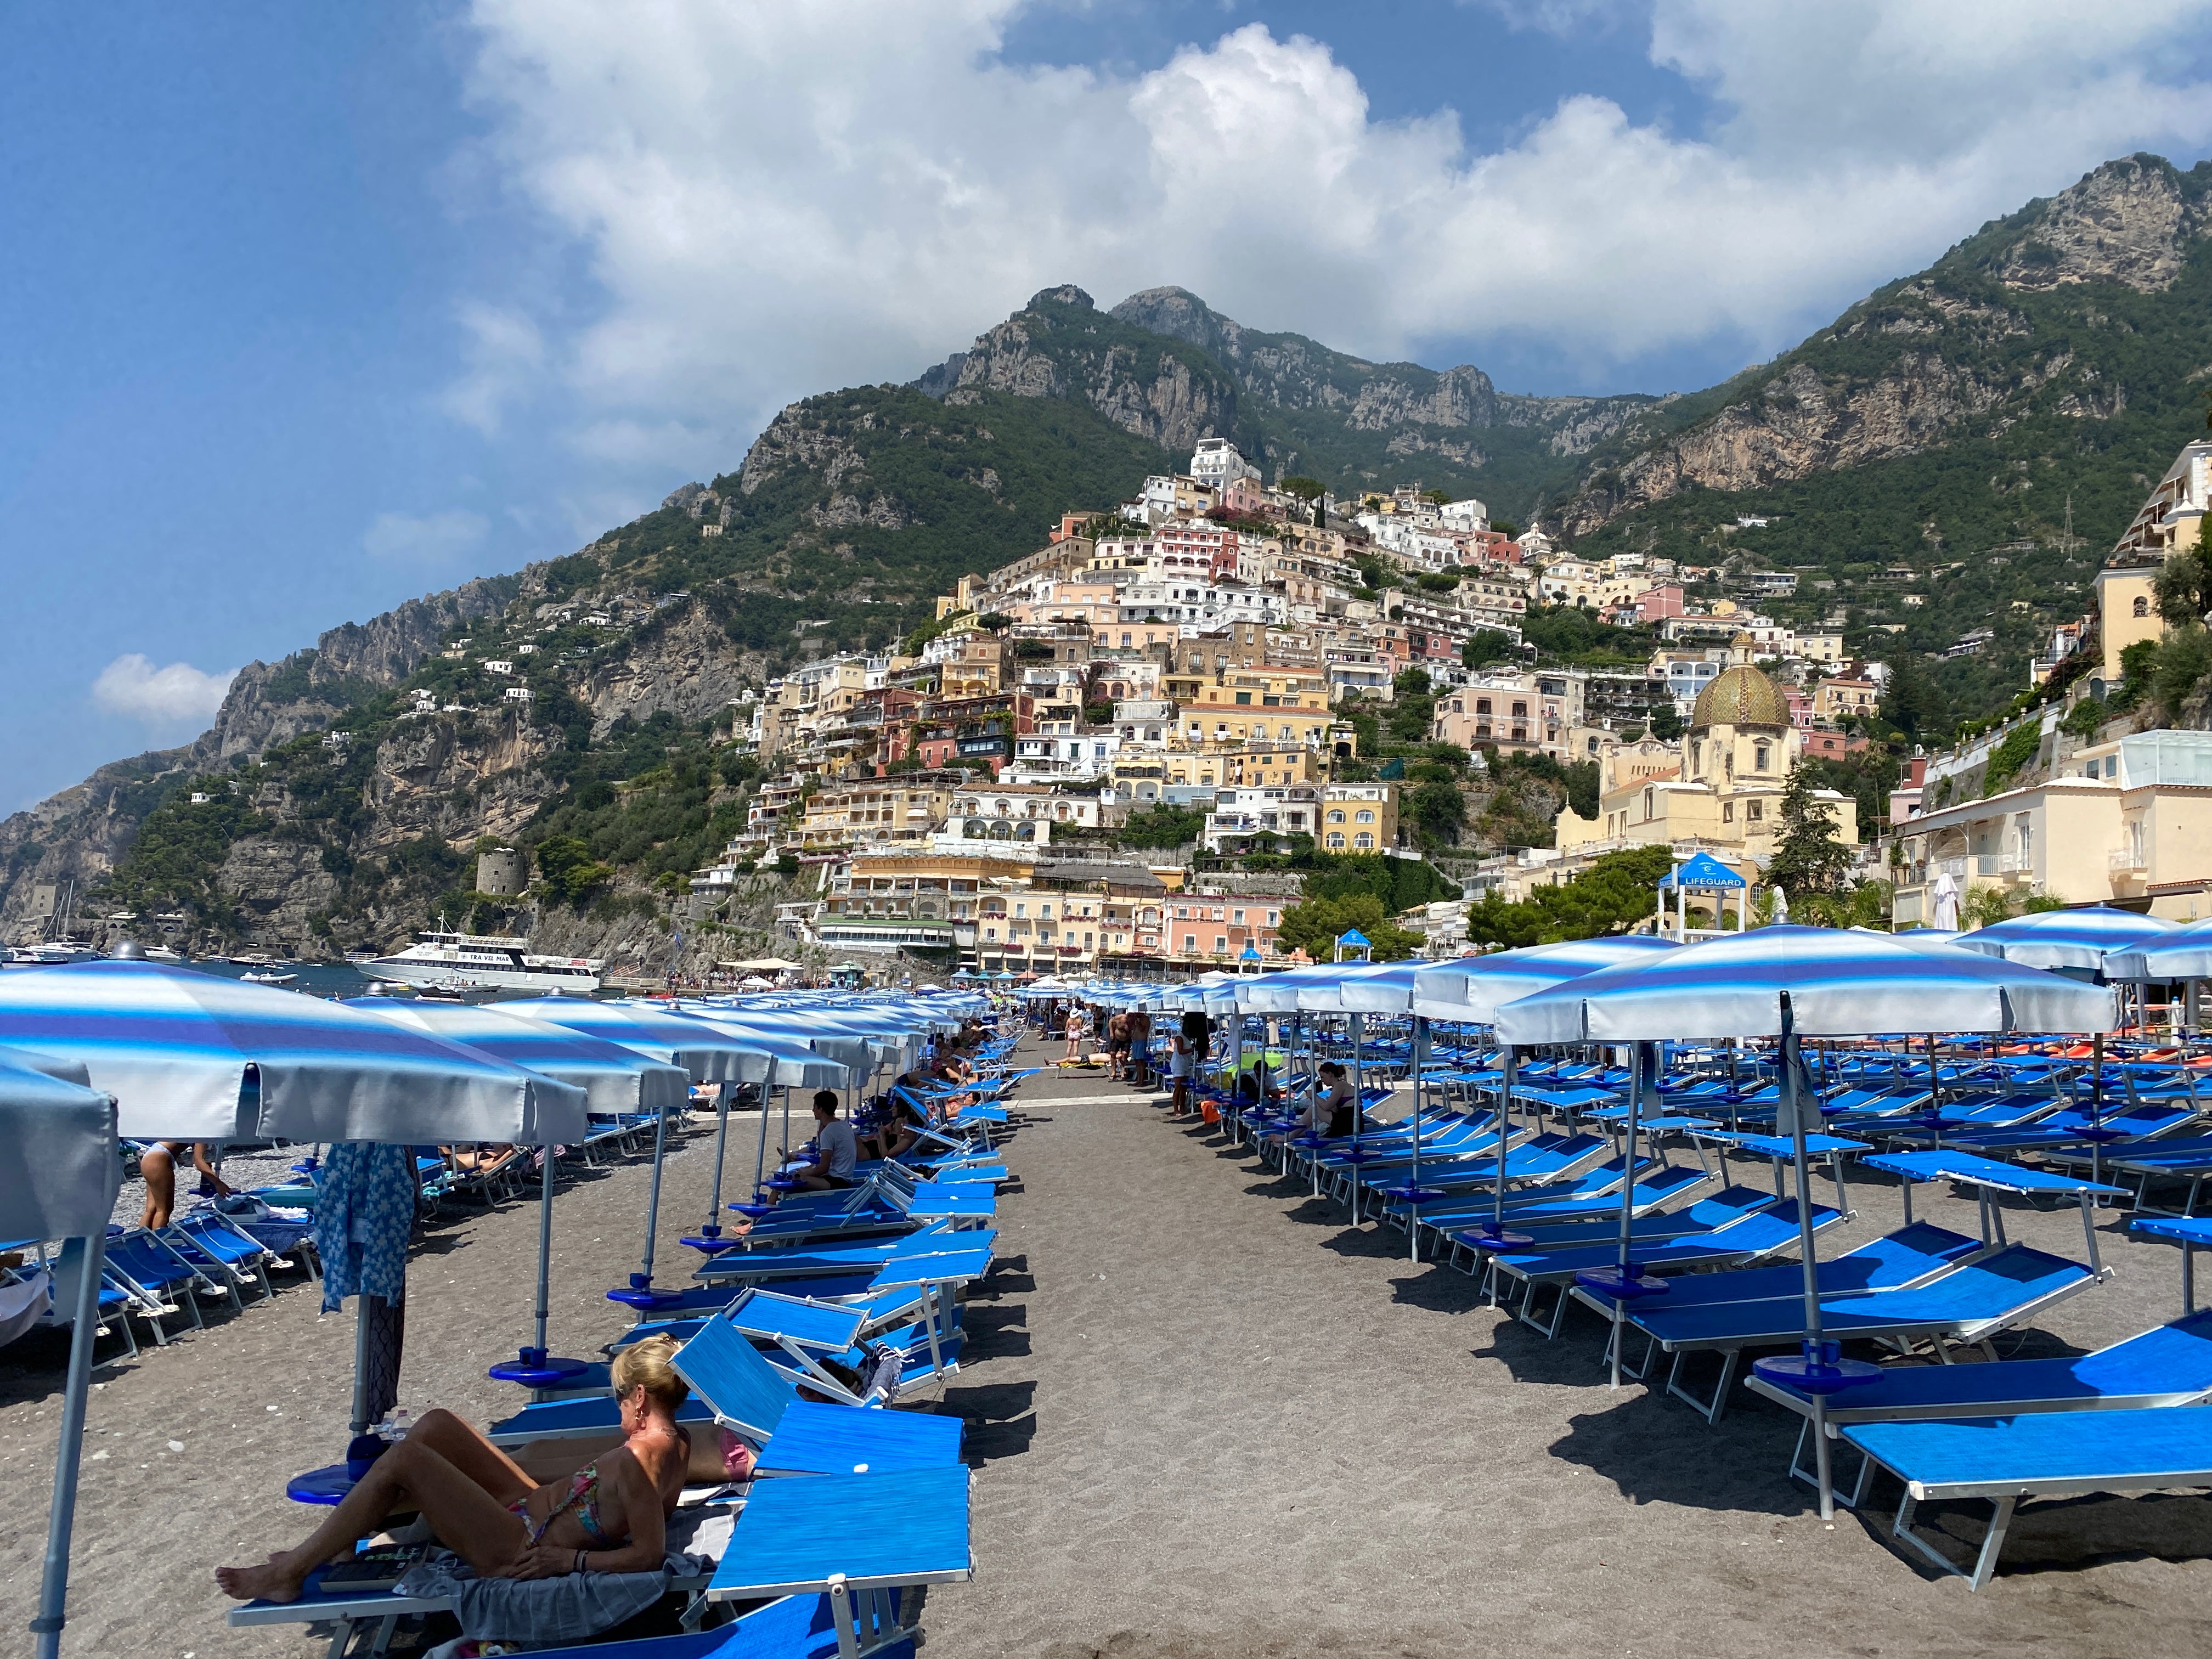 Dream destination? Positano on Italy’s Amalfi Coast